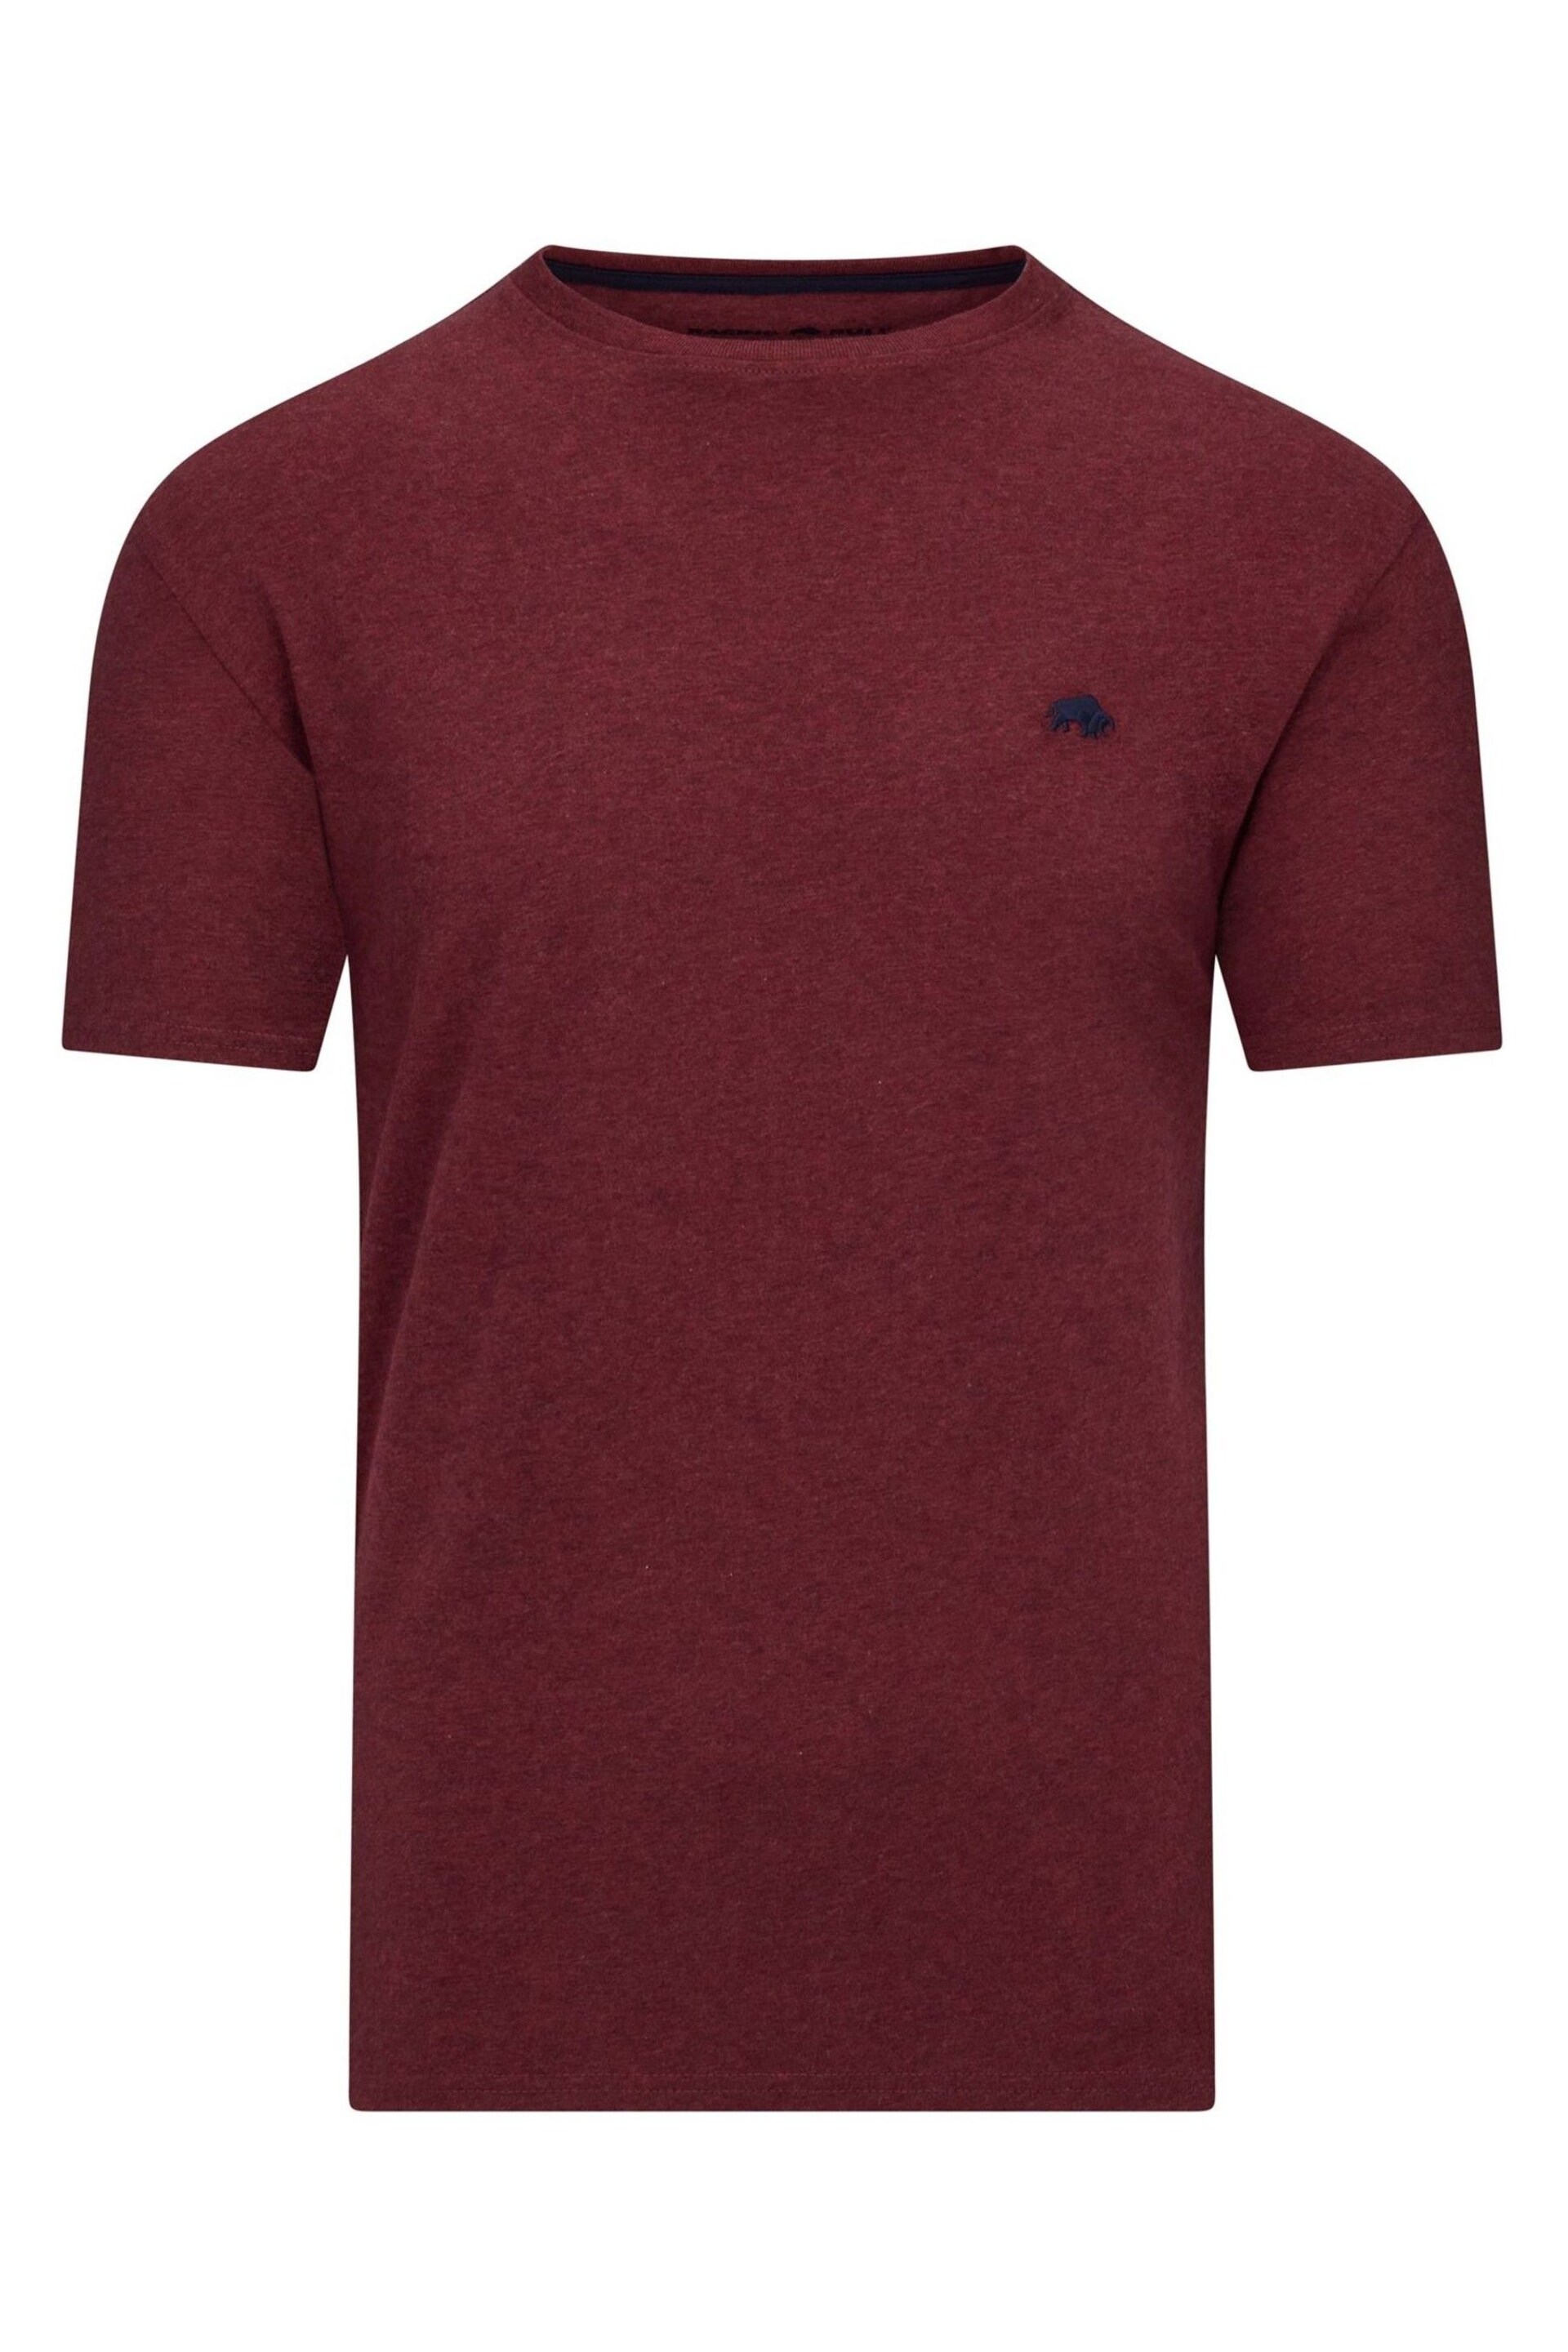 Raging Bull Black/Blue/Red Multipack Classic Organic T-Shirt - Image 6 of 7